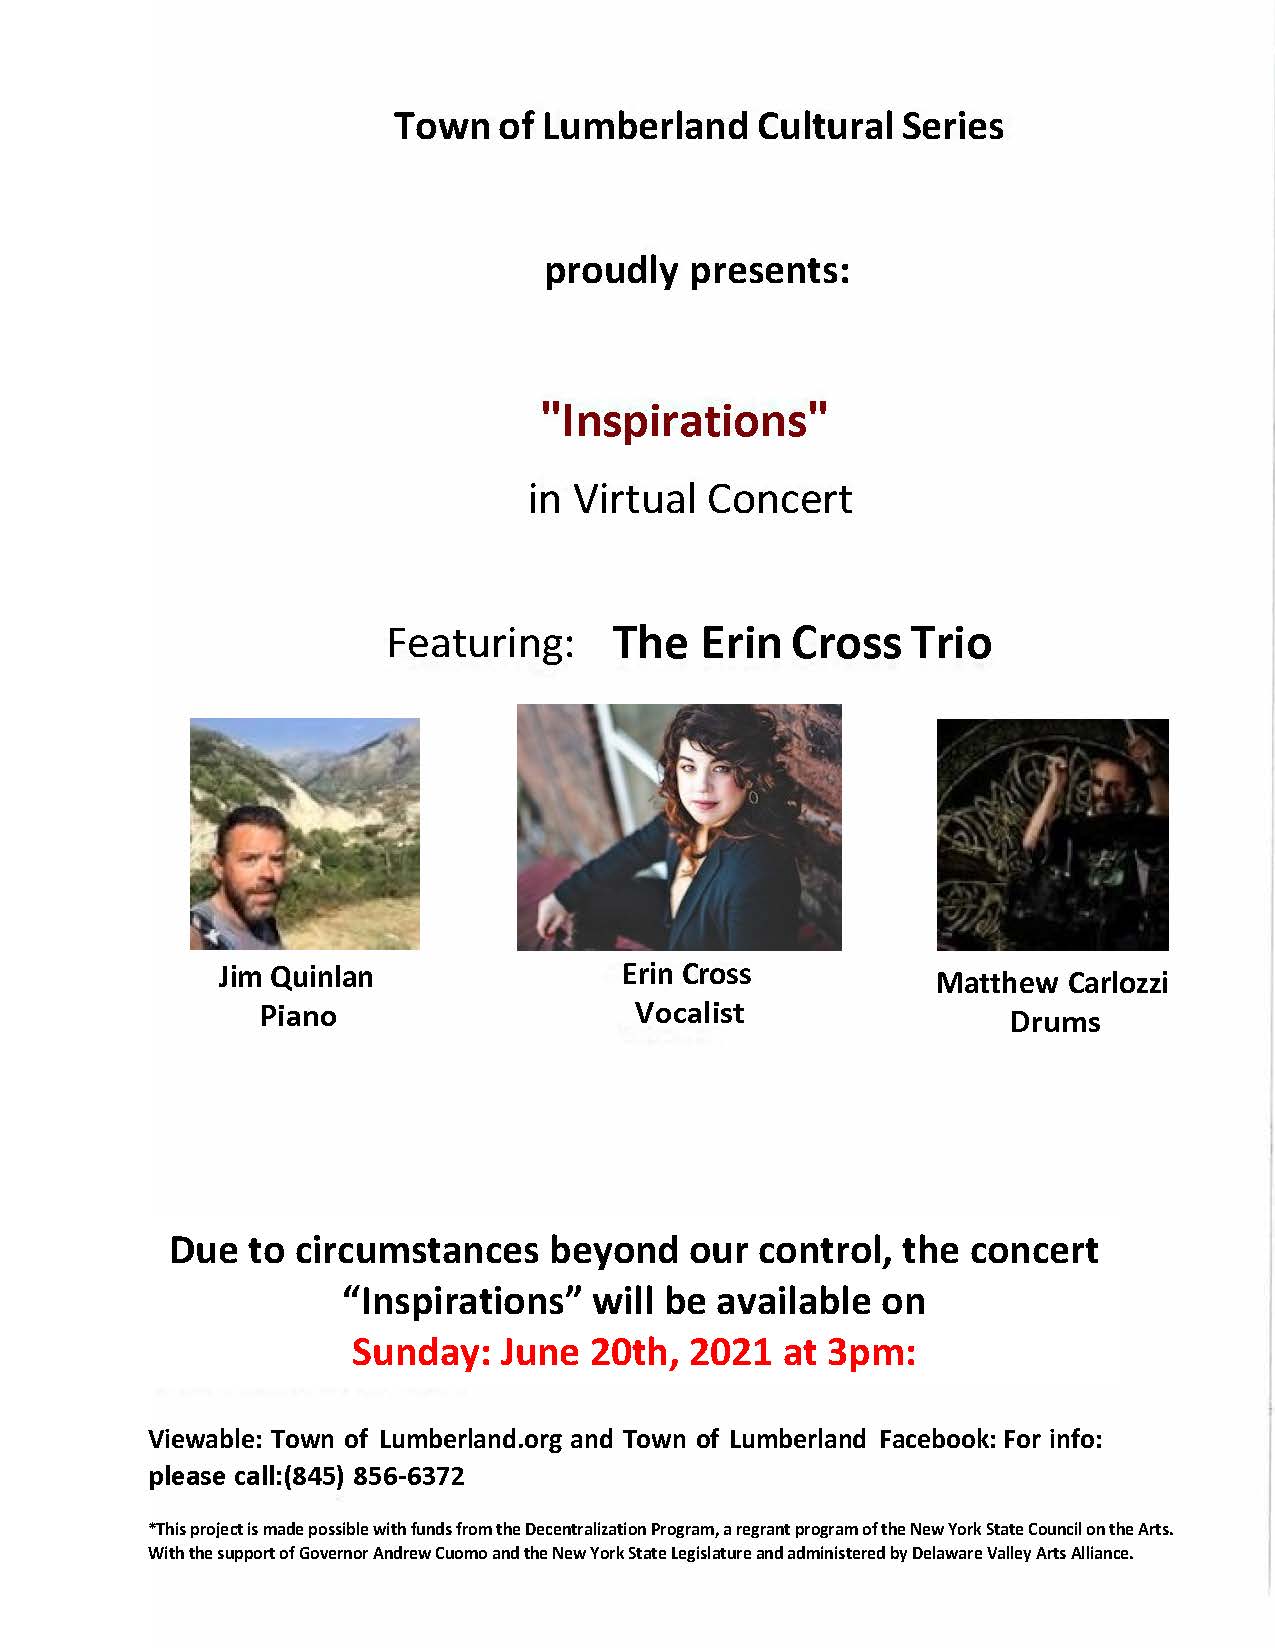 Erin Cross Trio Flyer version 3